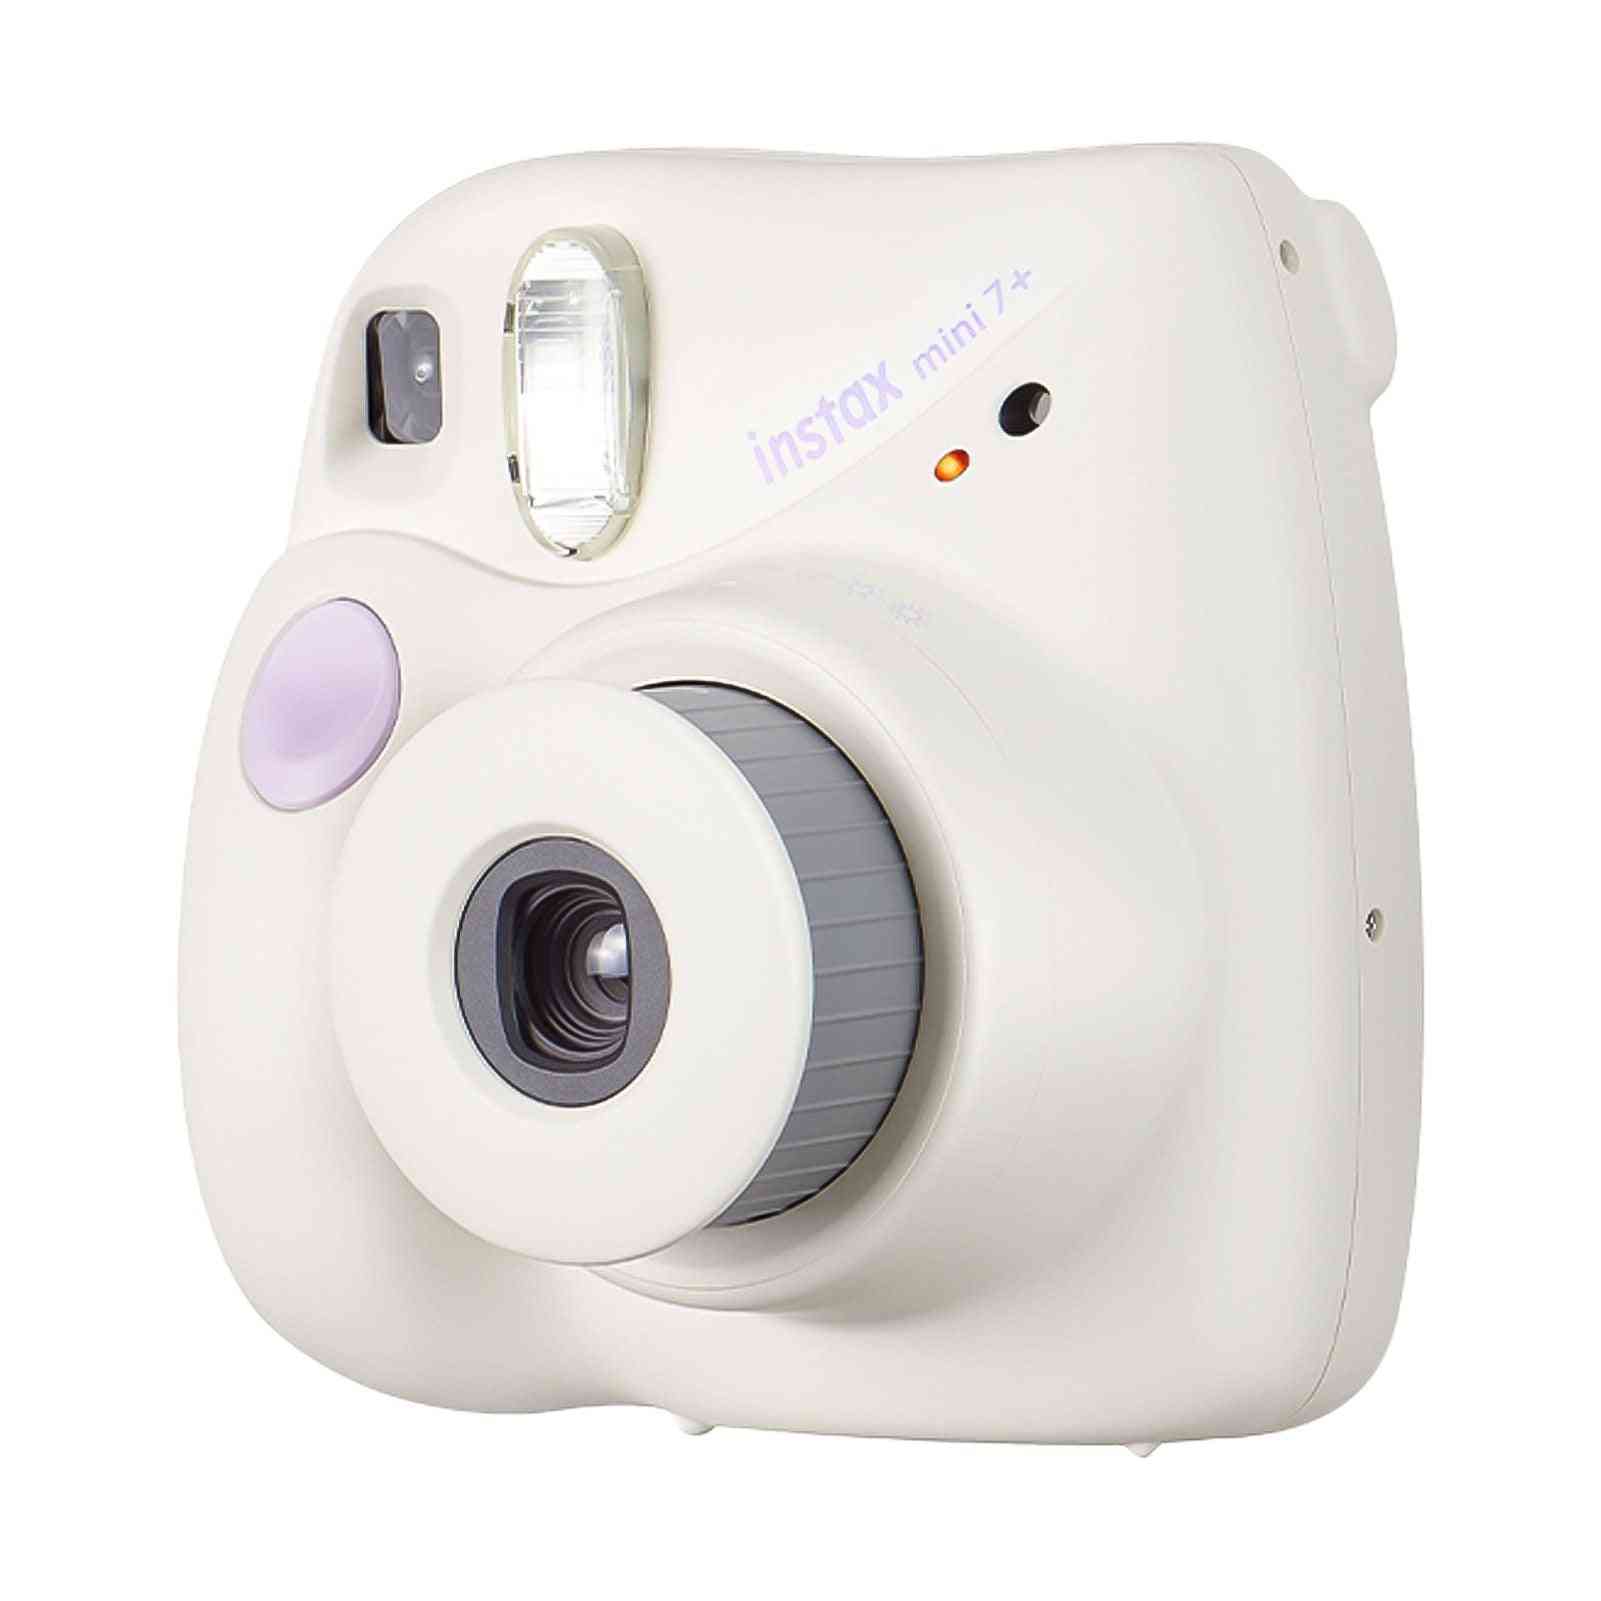 Instax Mini 7+ Instant Camera Film Cam Auto-focusing With Wrist Strap Birthday Christmas Festival For Kid